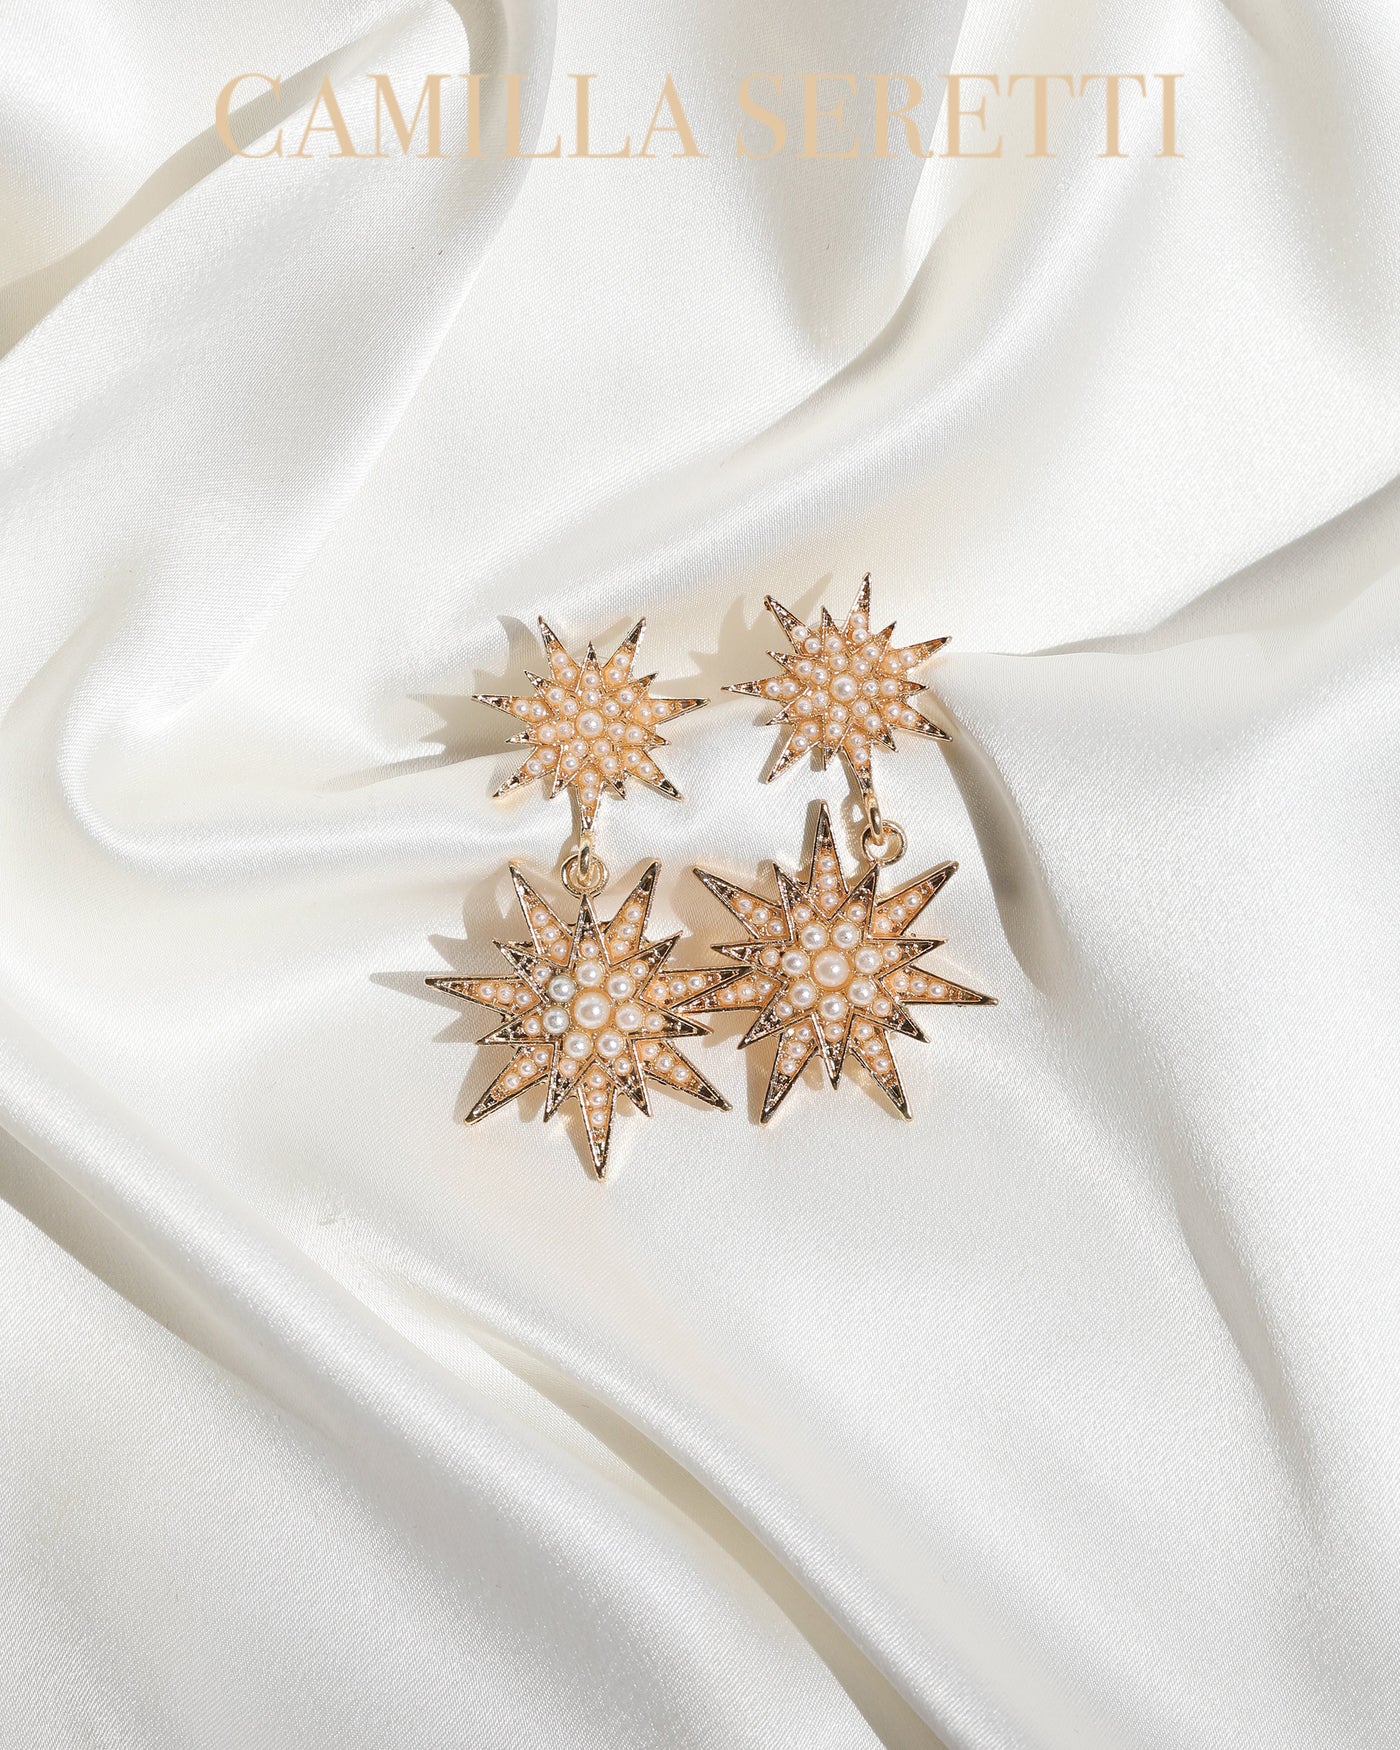 Ciera Star Pearl Earrings - CAMILLA SERETTI